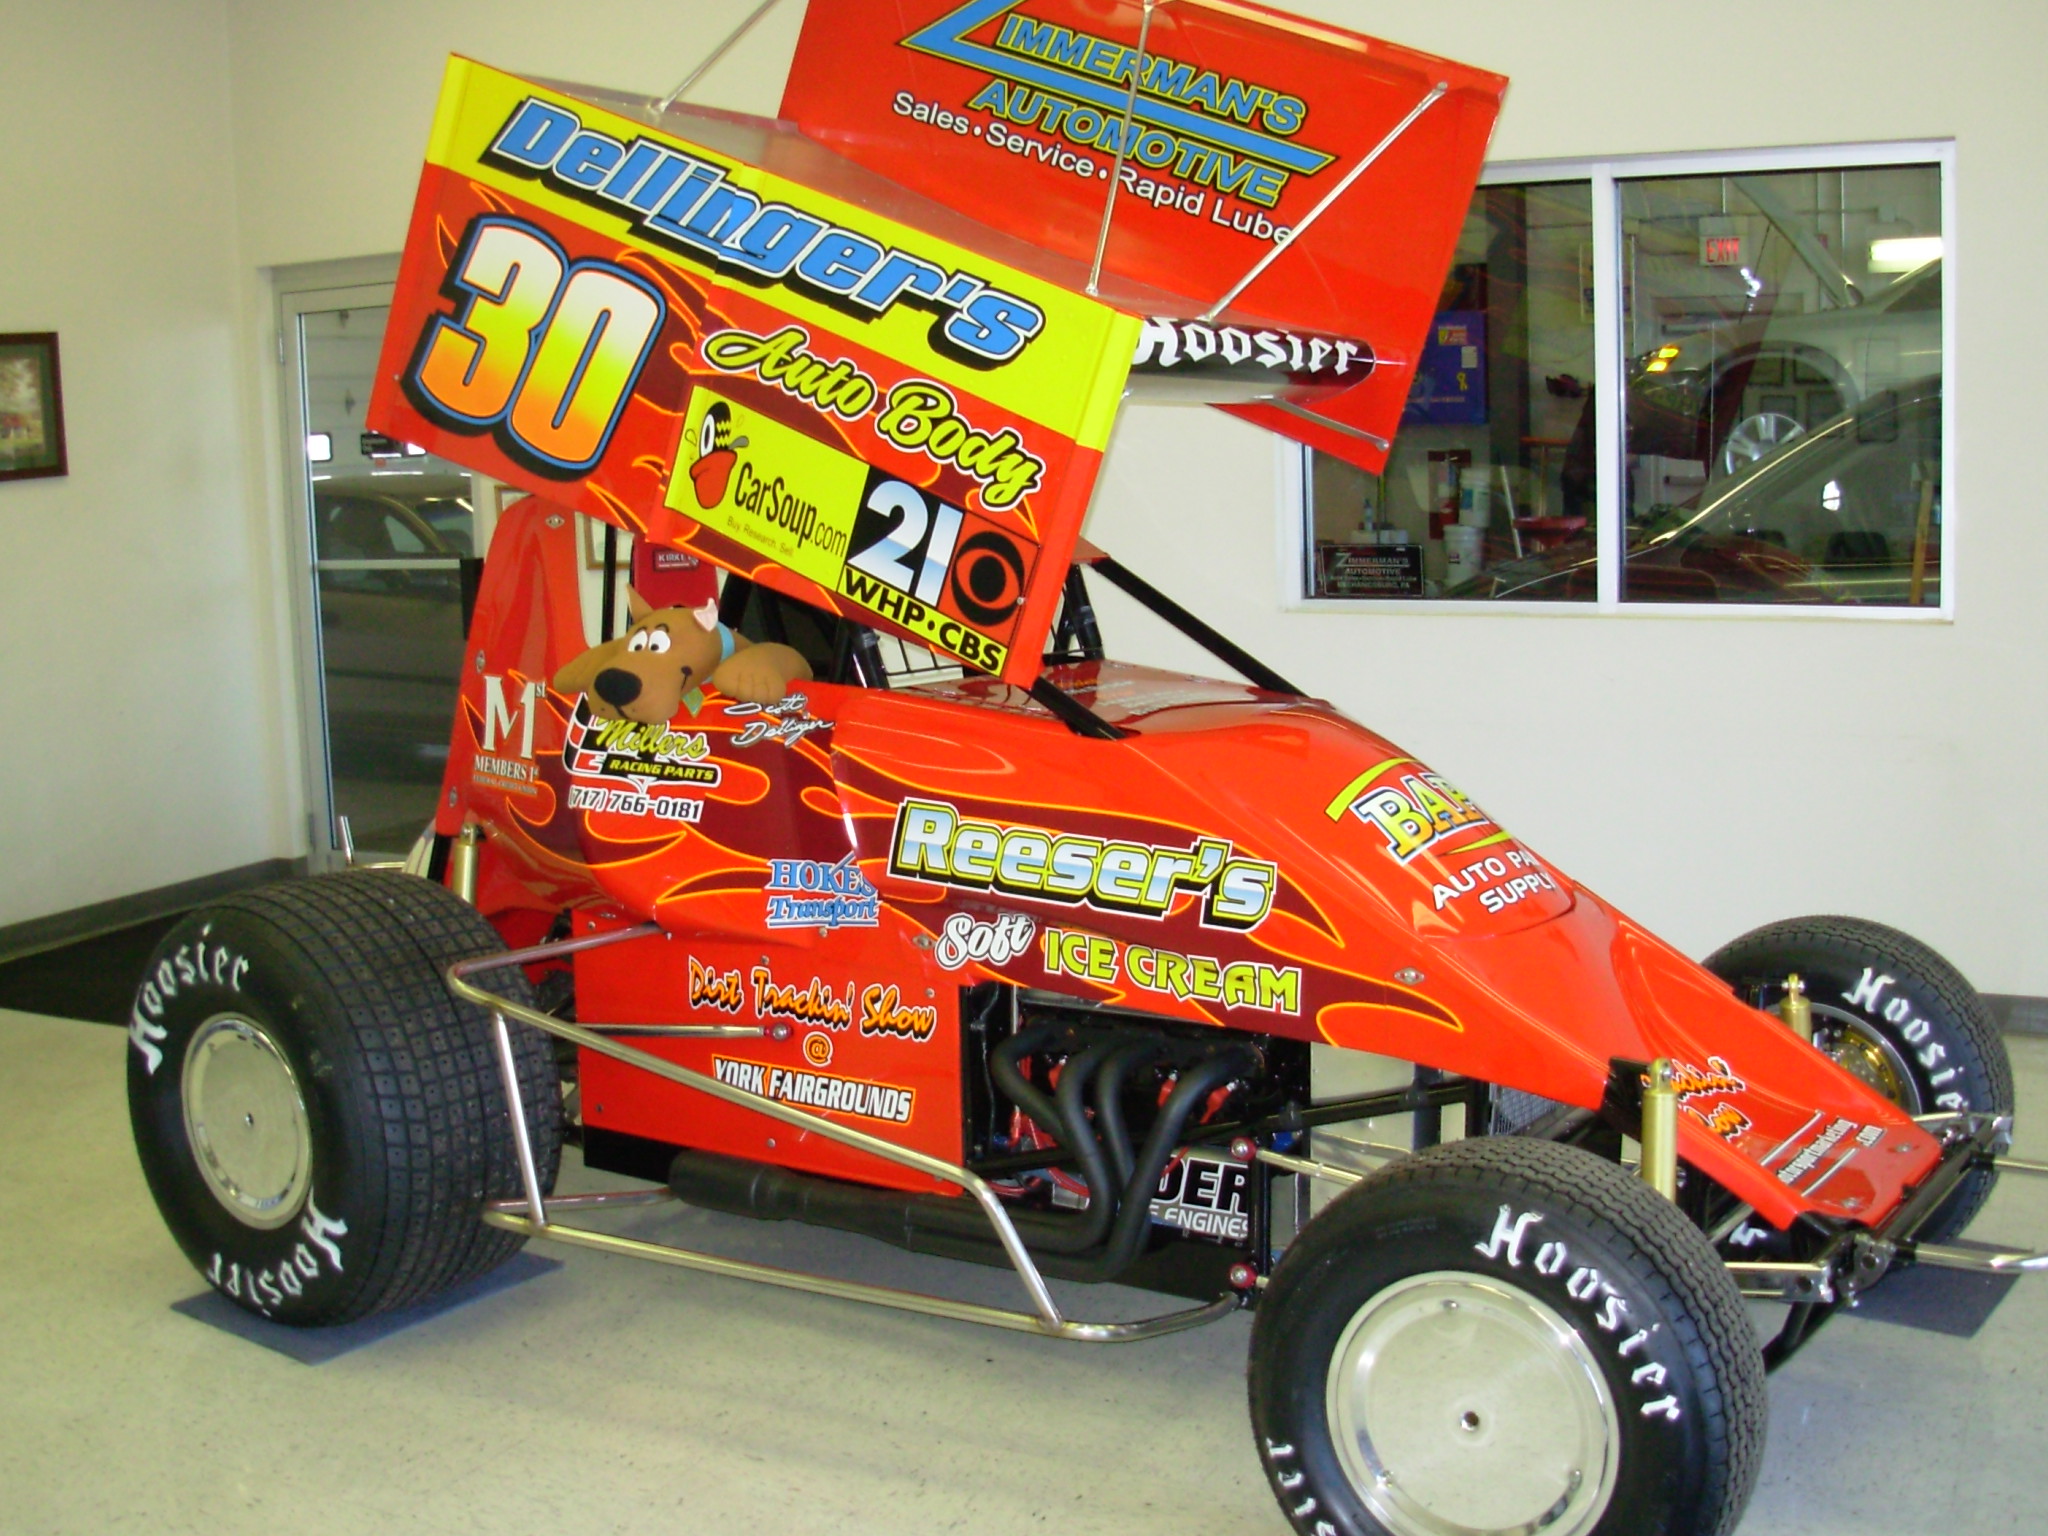 Scott Dellinger's Super Sportsman
...on display at Zimmerman's Automotive
